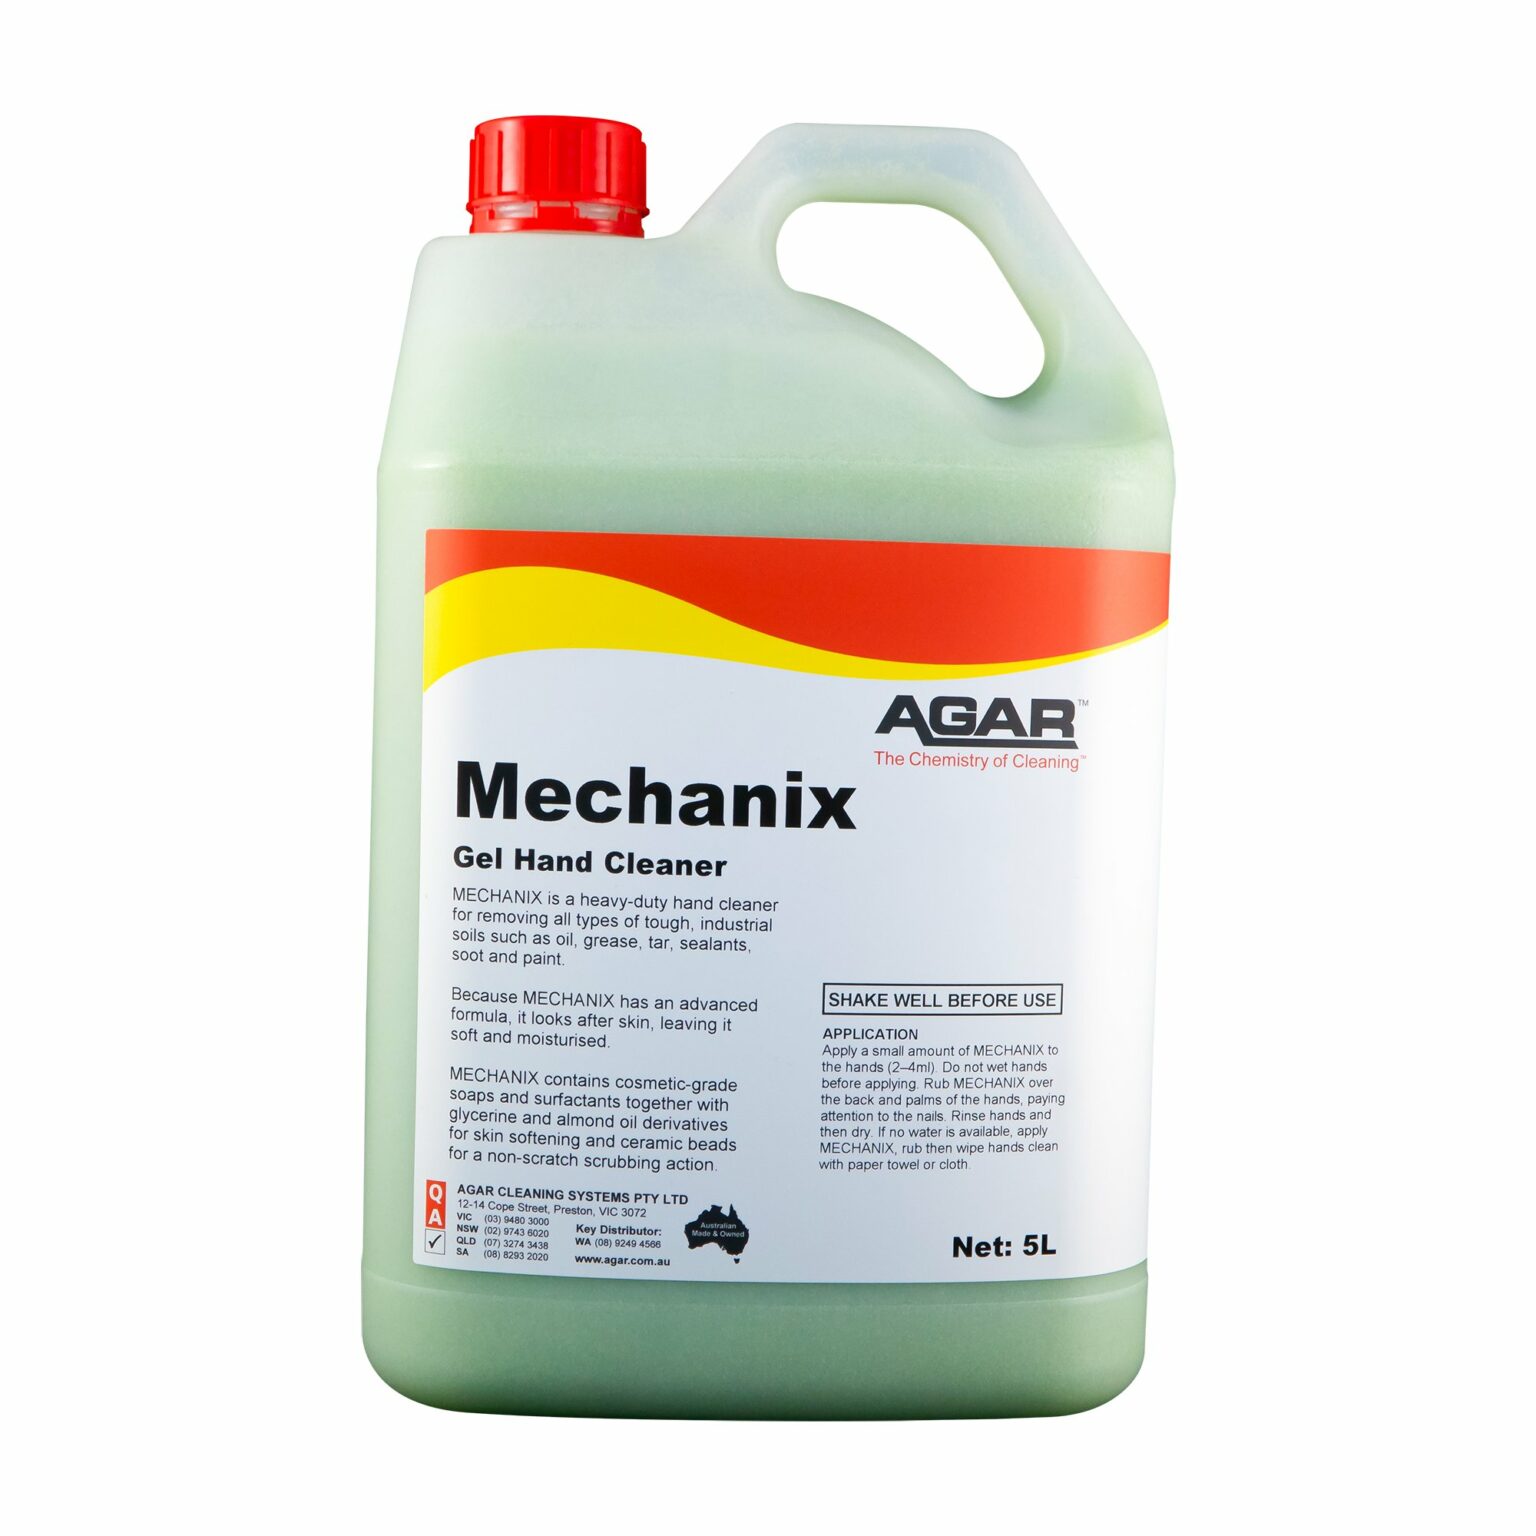 Agar Mechanix Gel Hand Cleaner, 5L